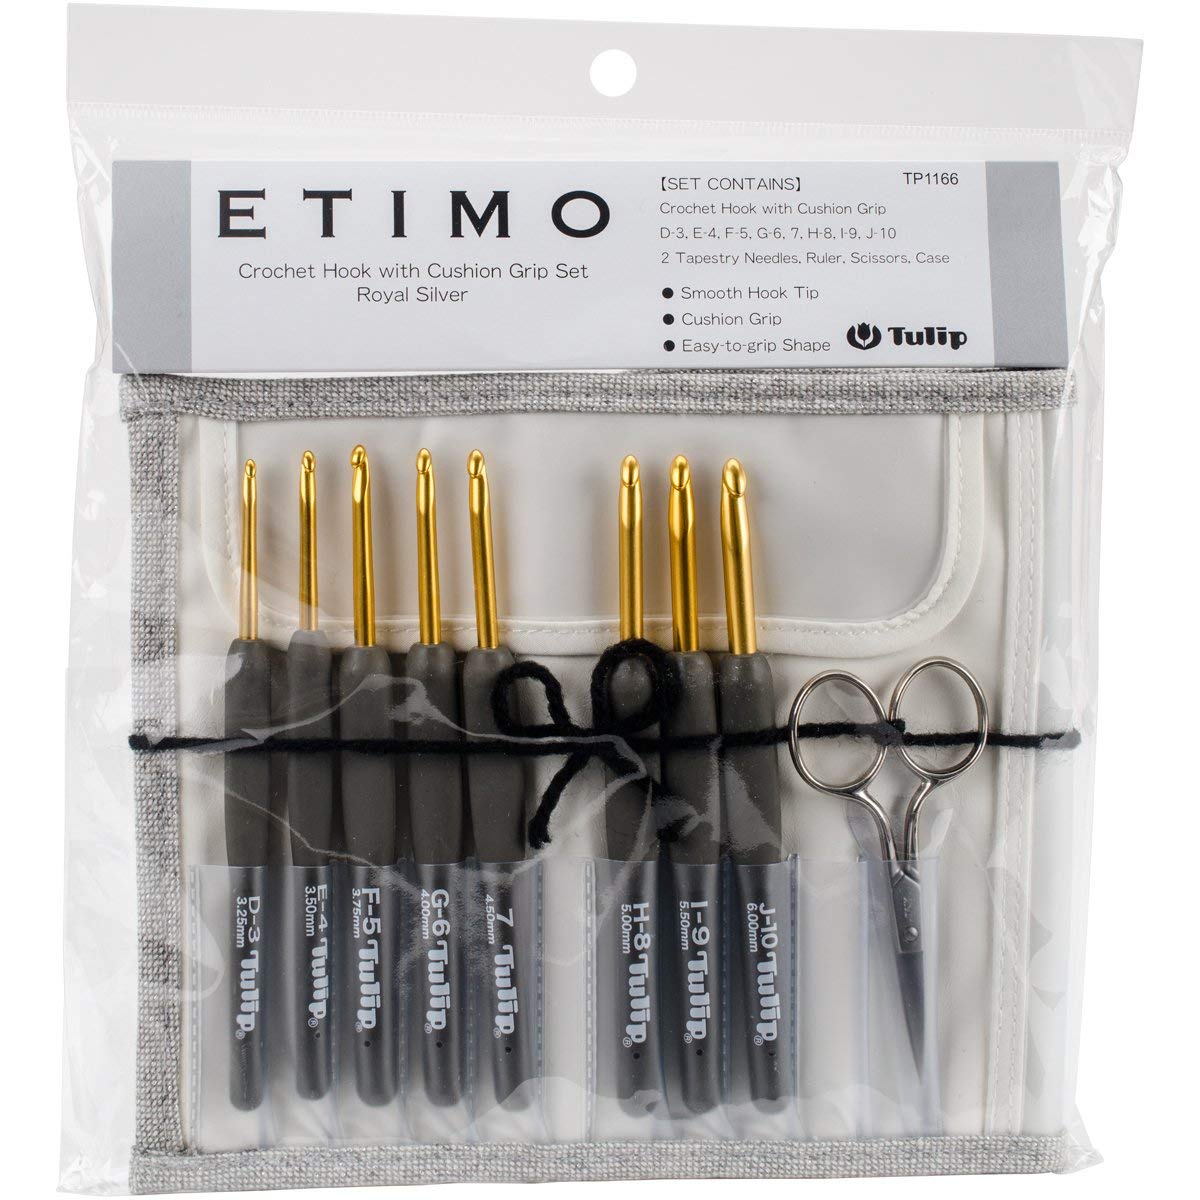 Tulip Etimo Premium Gold Crochet Hook Set